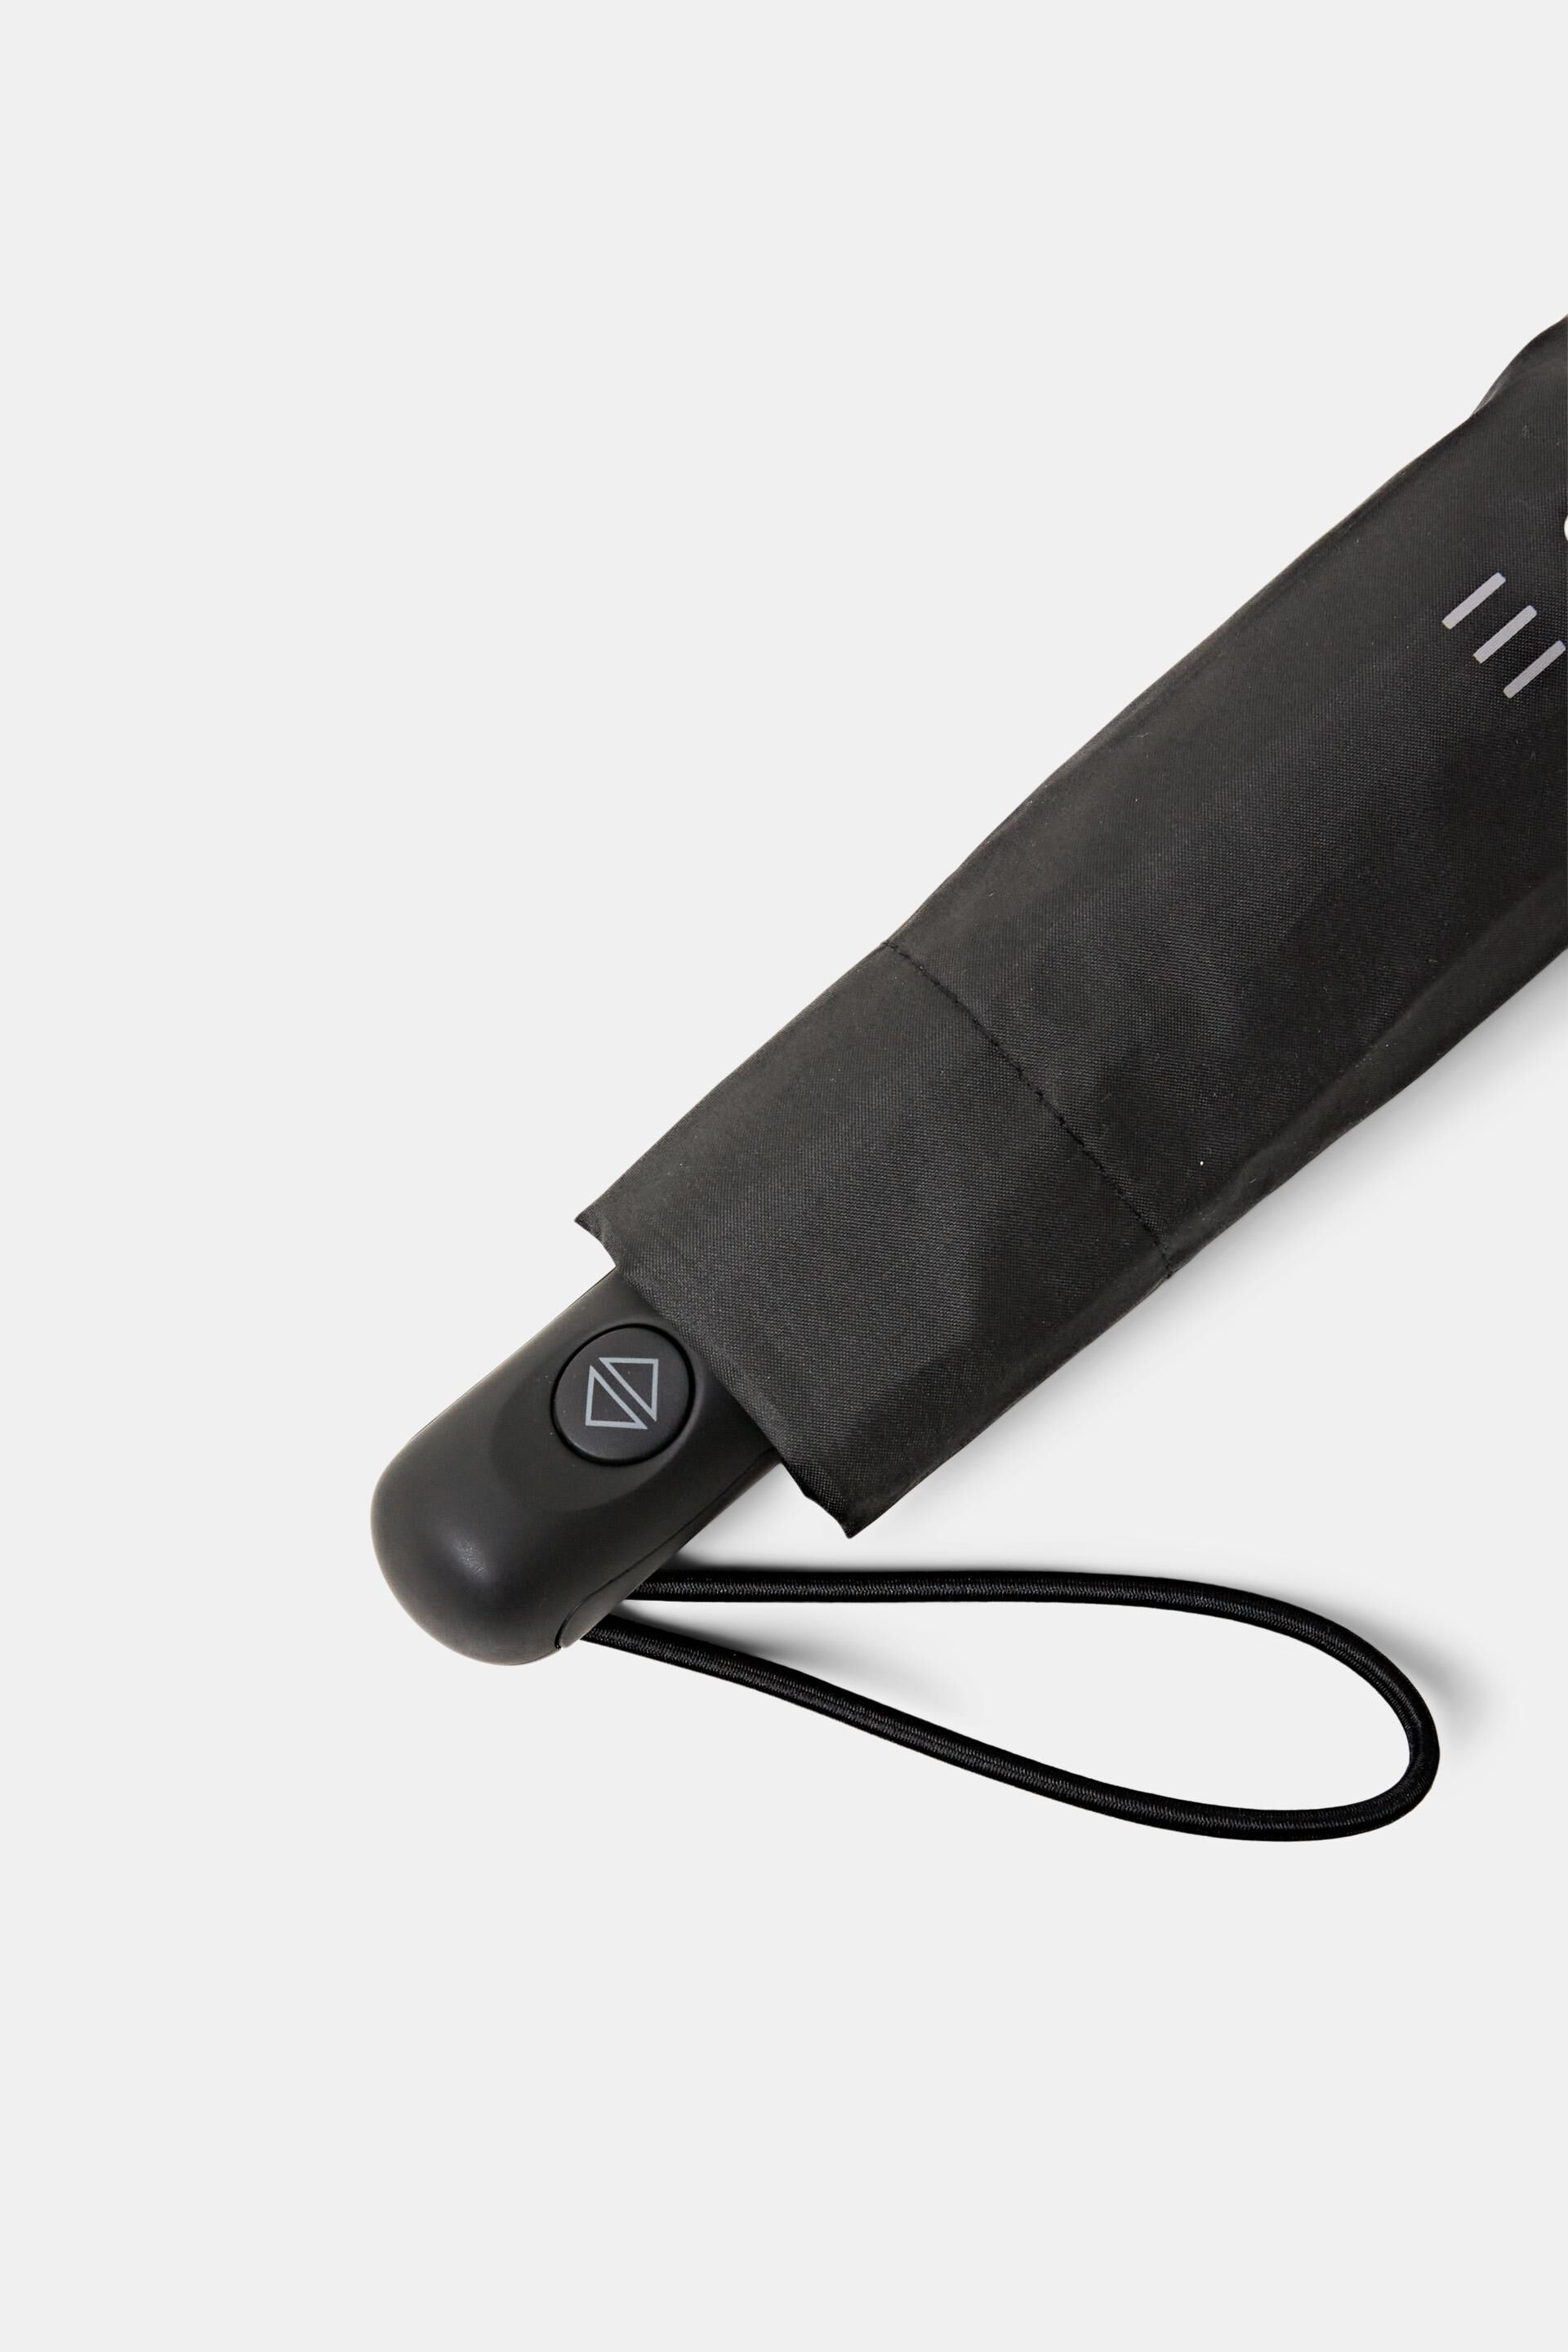 Esprit pocket in umbrella black slimline Easymatic